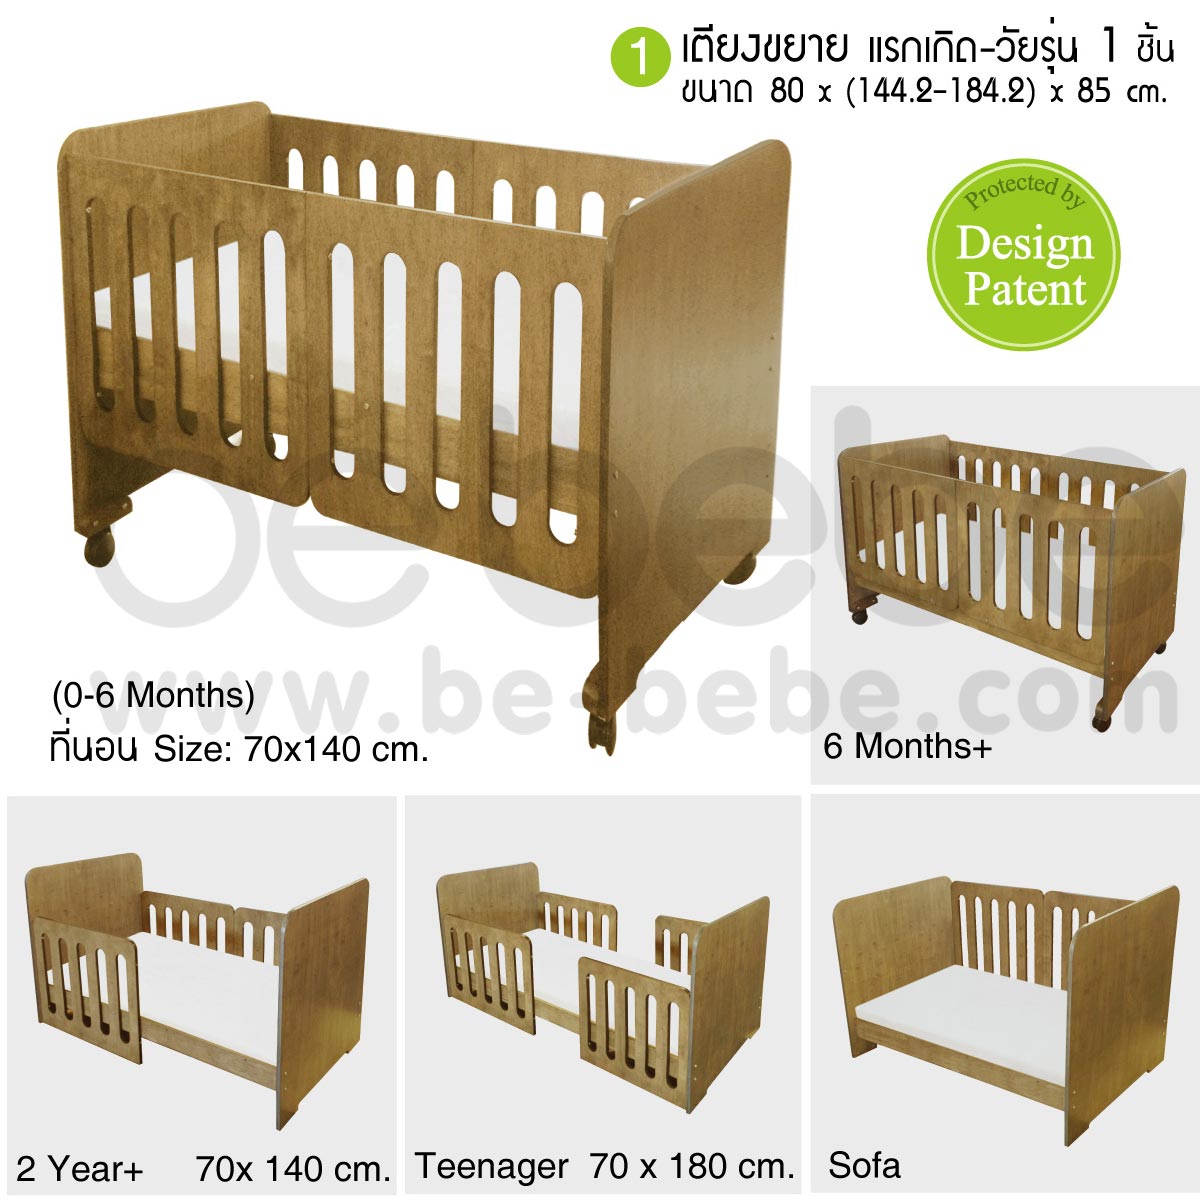 be bebe :ชุดเตียงเด็กแรกเกิด-วัยรุ่นขยายความยาวและปรับเป็นโซฟาได้+ที่นอนฟองน้ำ+ชุดเครื่องนอน (70x140/180) /น้ำตาลอ่อน